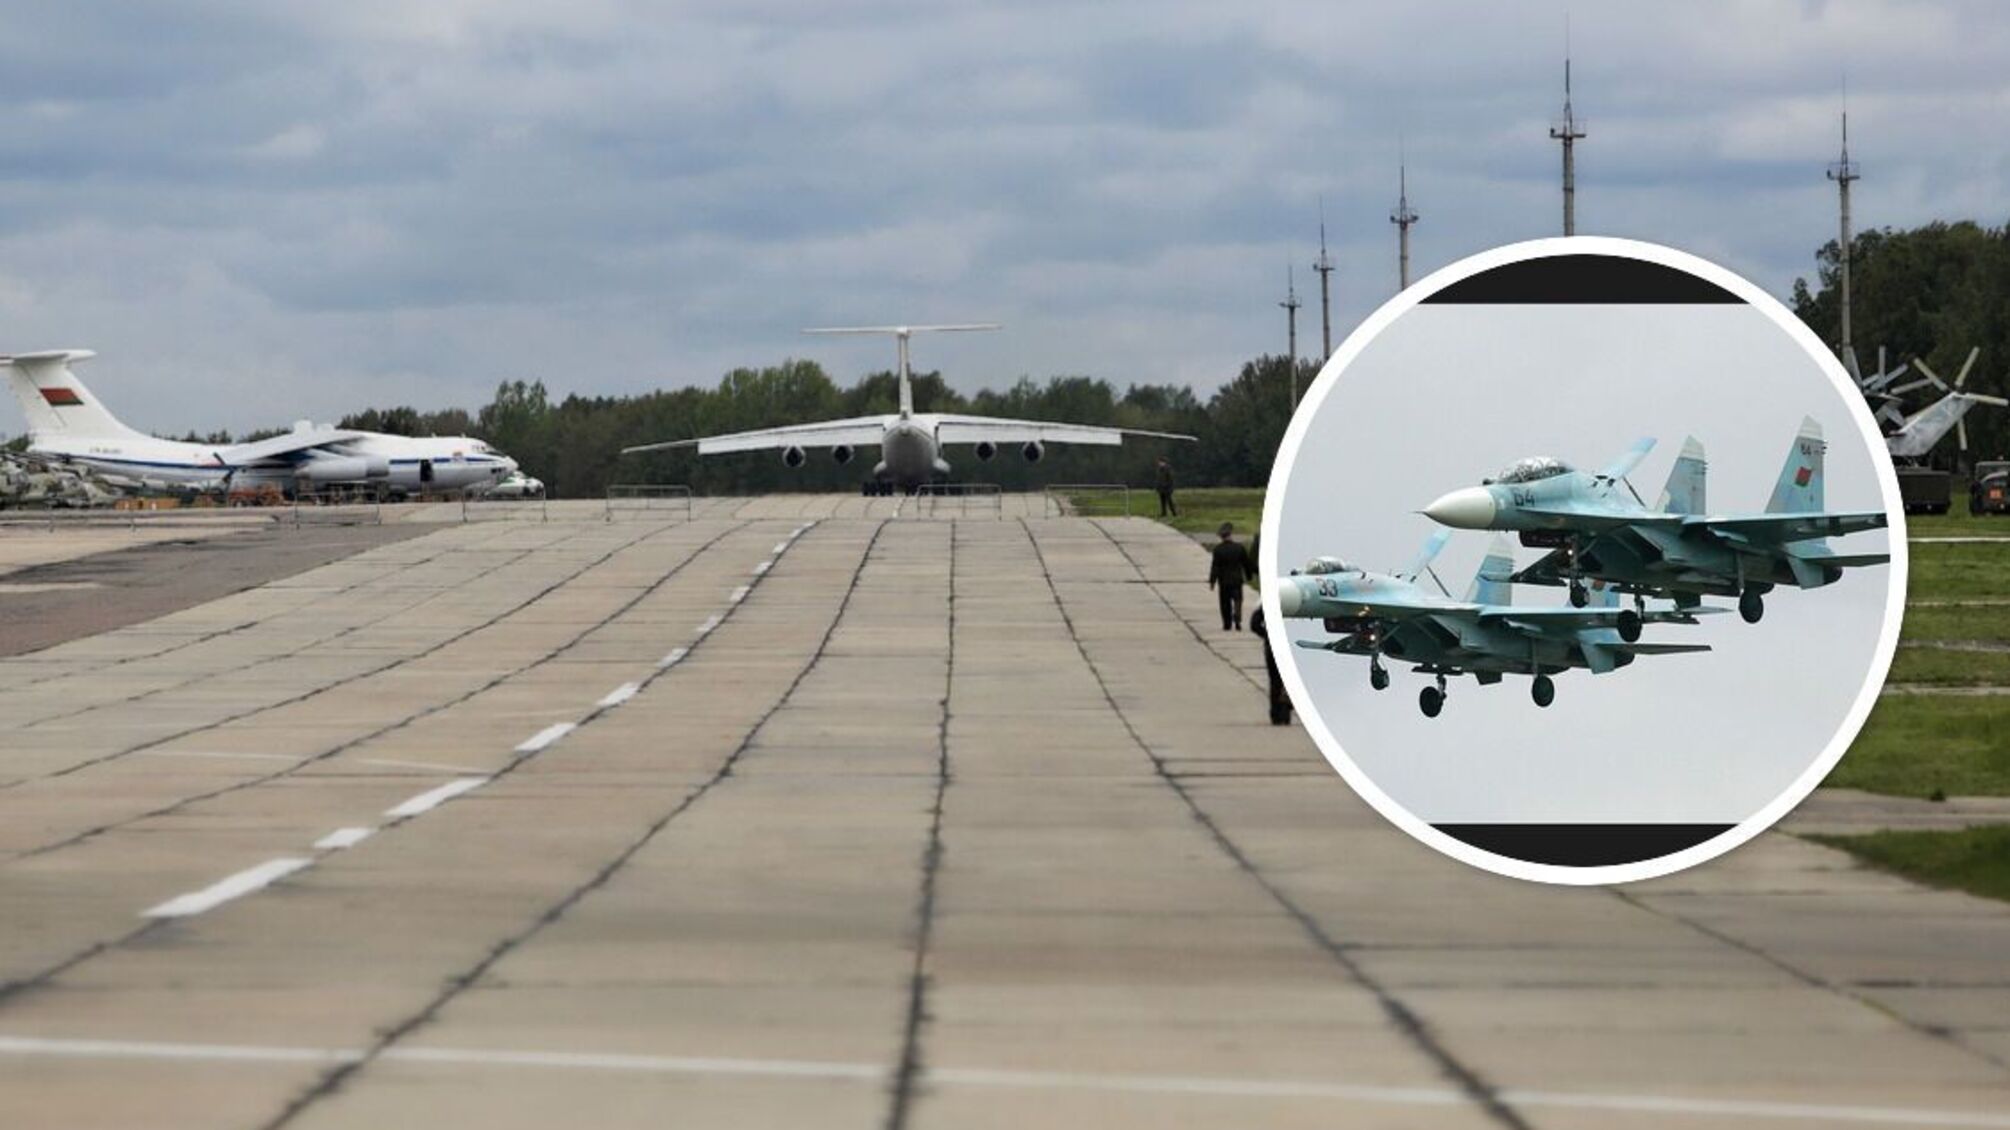 На аэродроме 'Мачулищи' в Беларуси произошло два взрыва: что известно